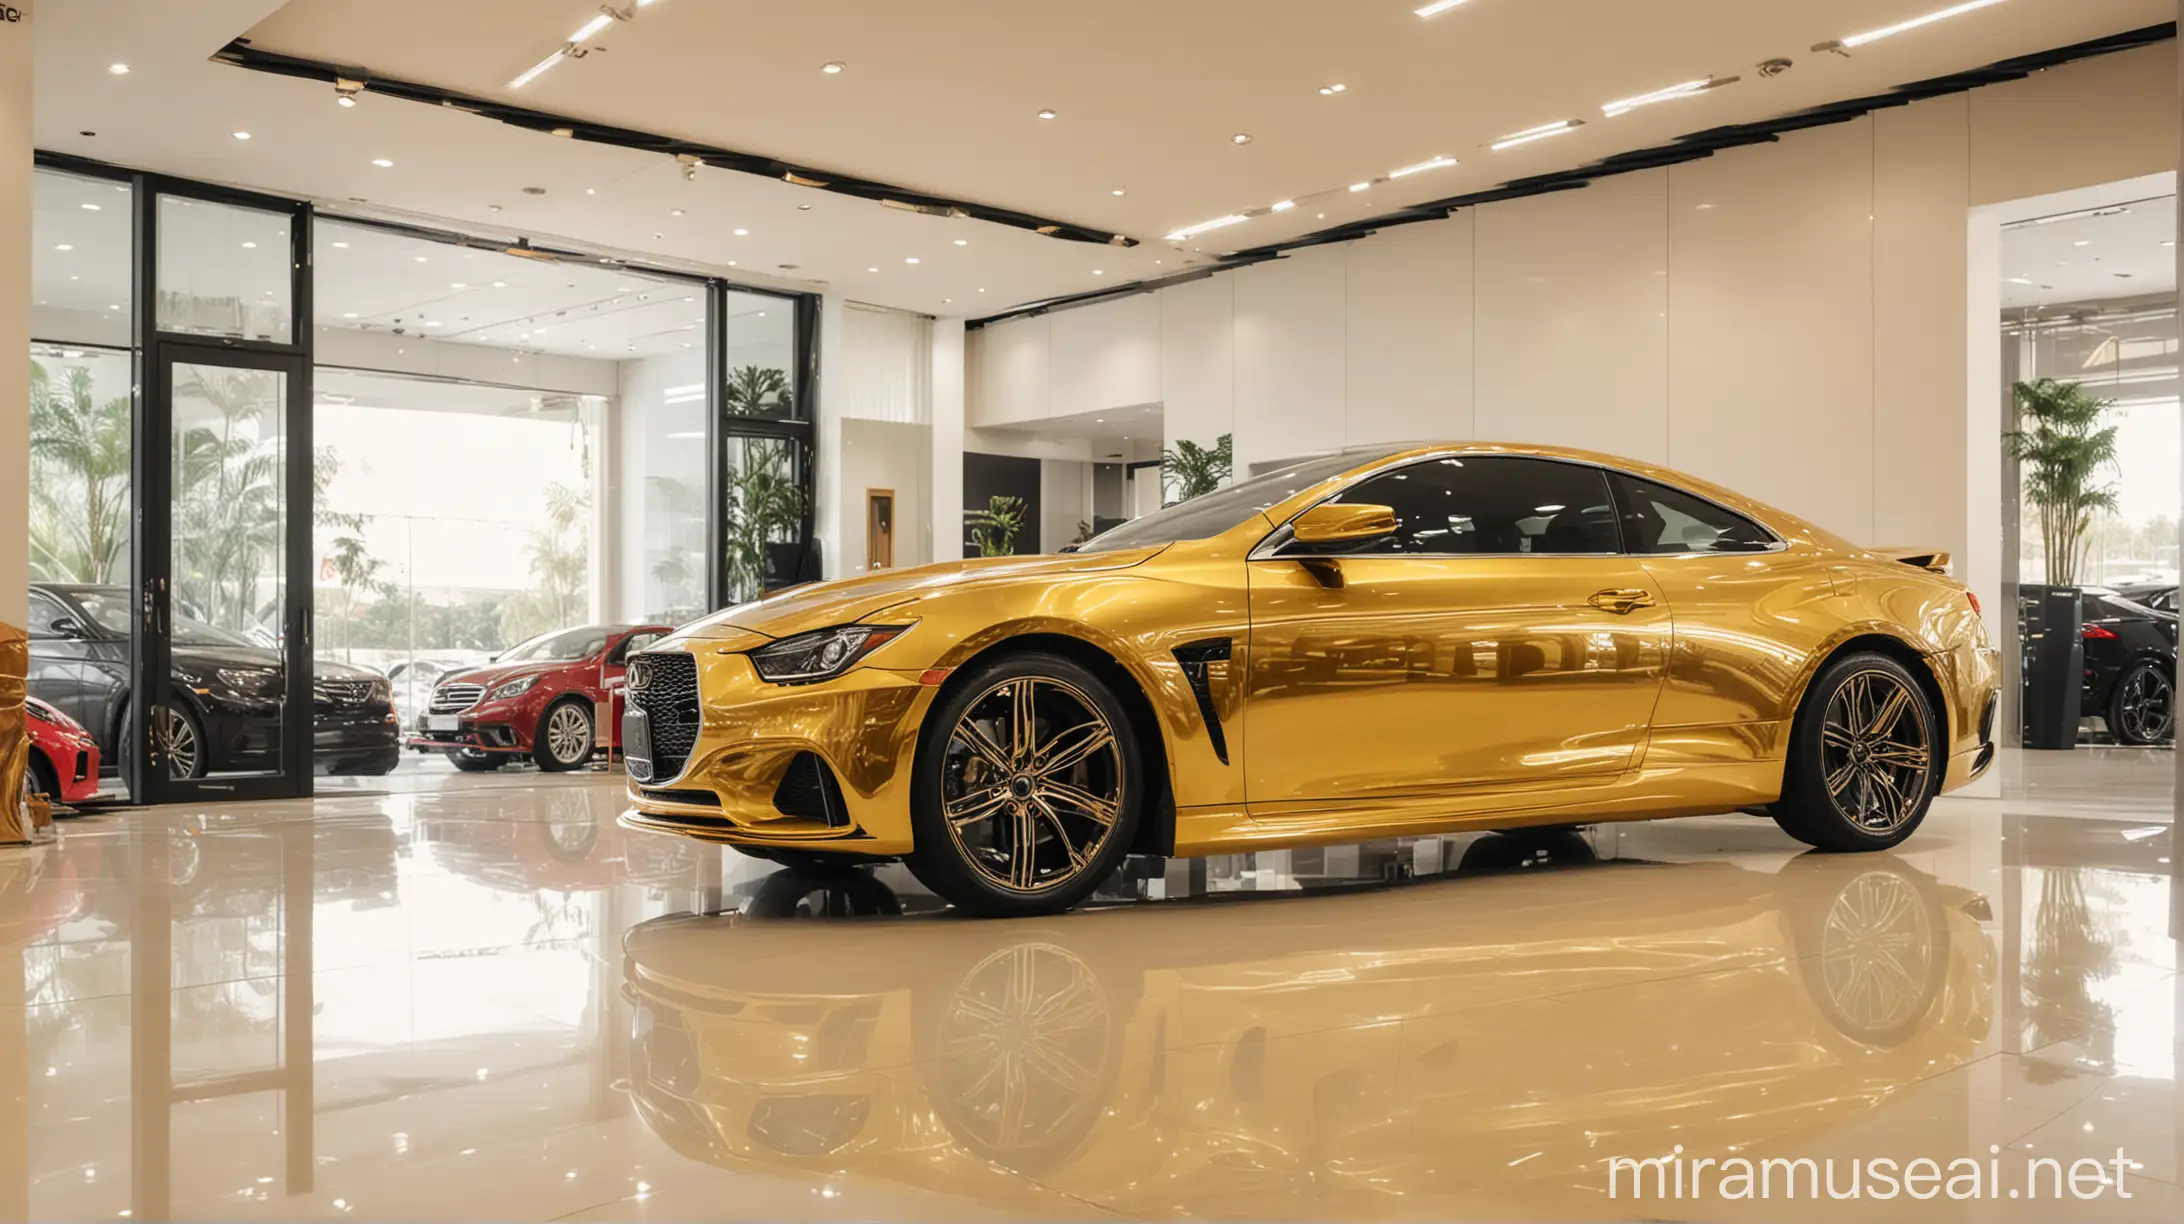 Golden Car Inside Showroom